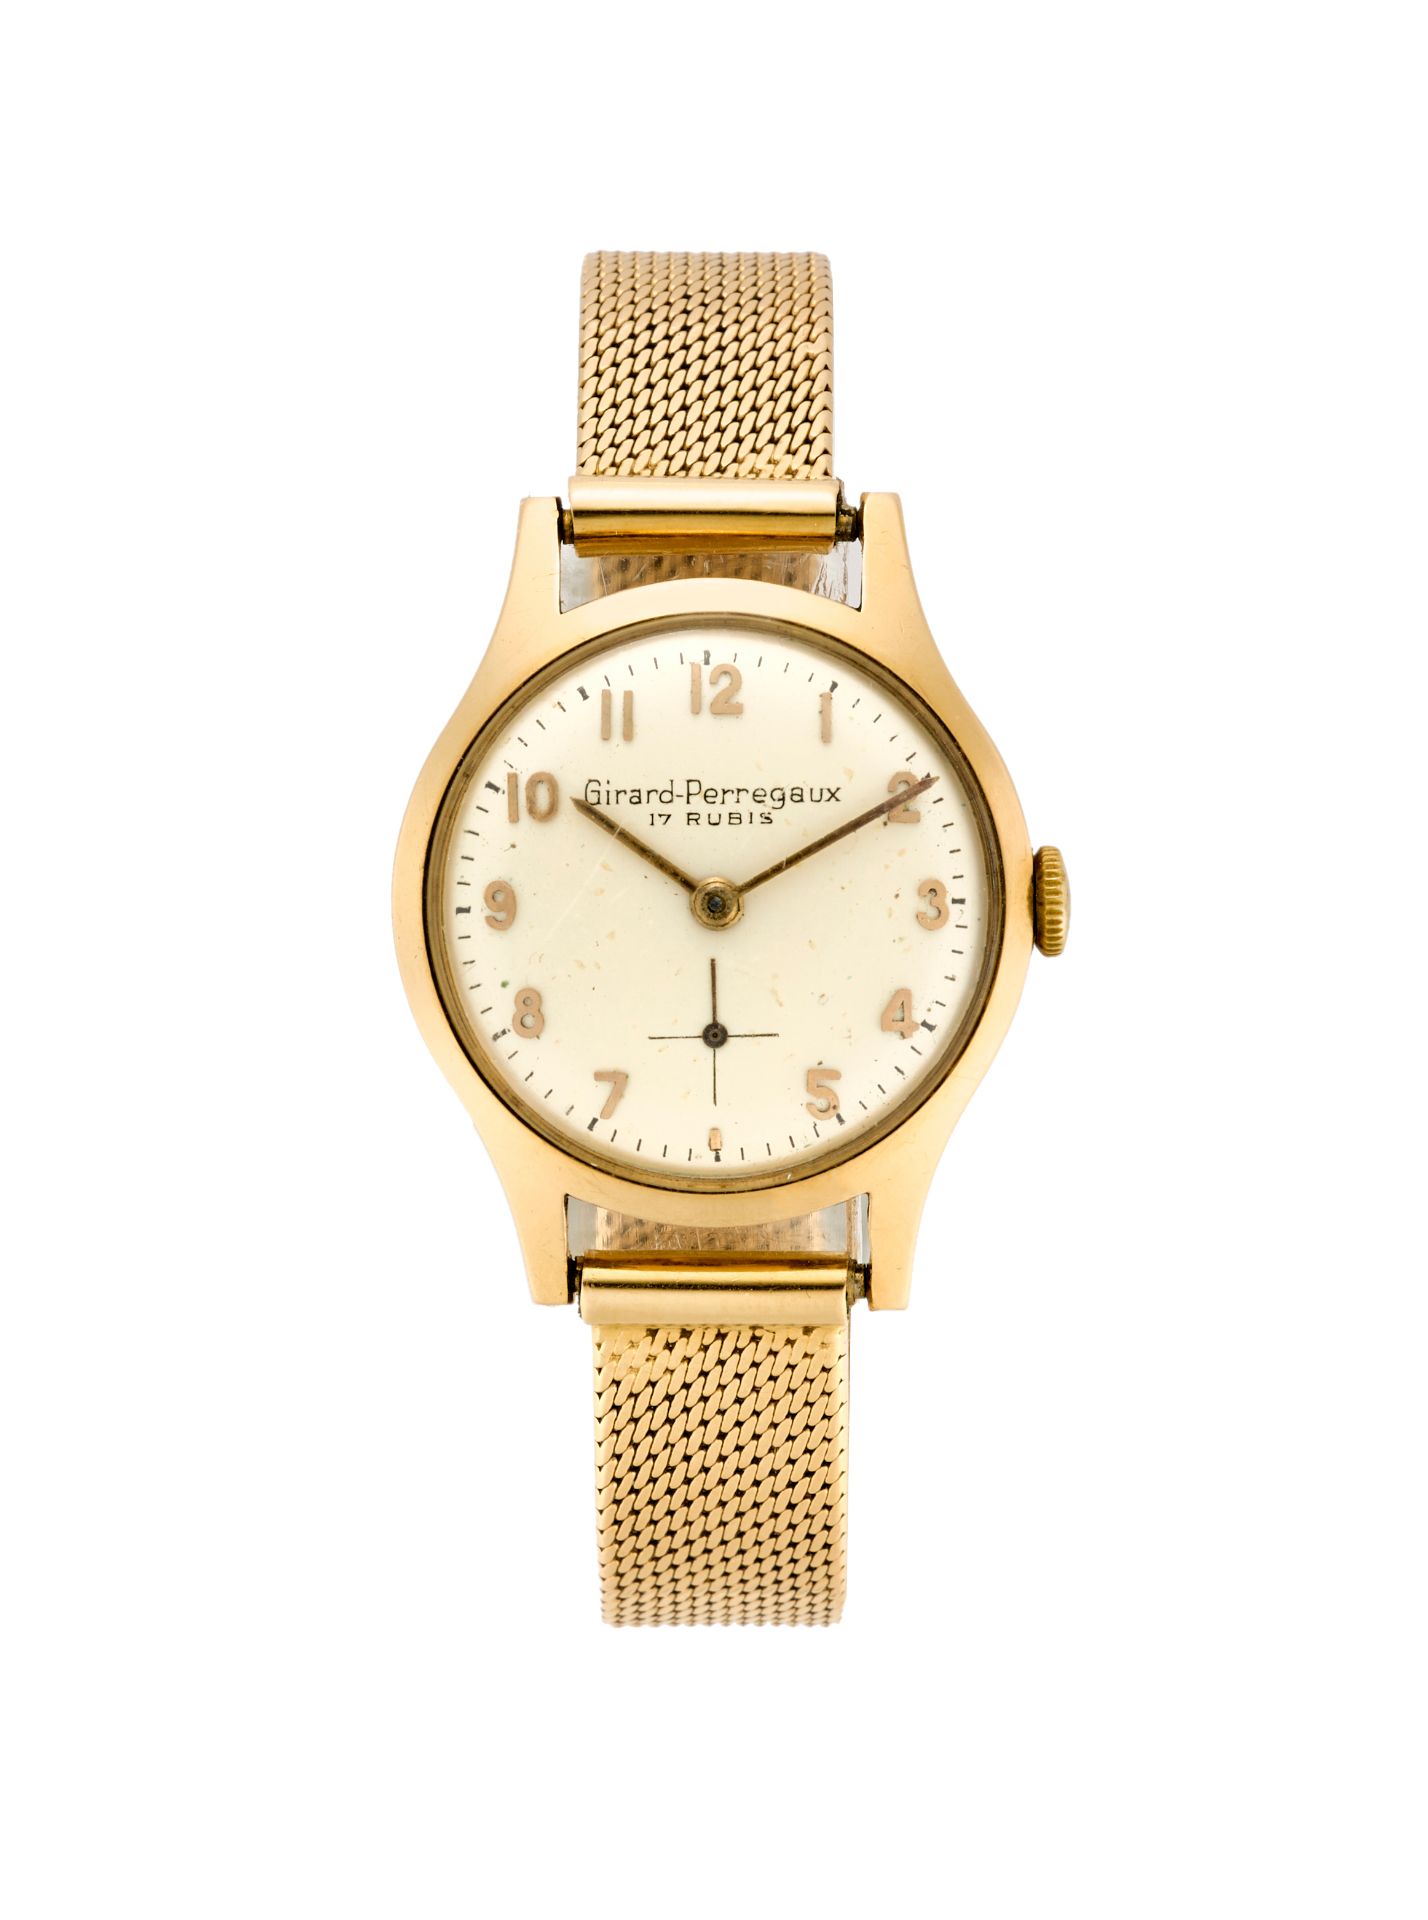 Girard-PerregauxLady's 18K gold wristwatch1980sDial, movement and case signedManual-wind